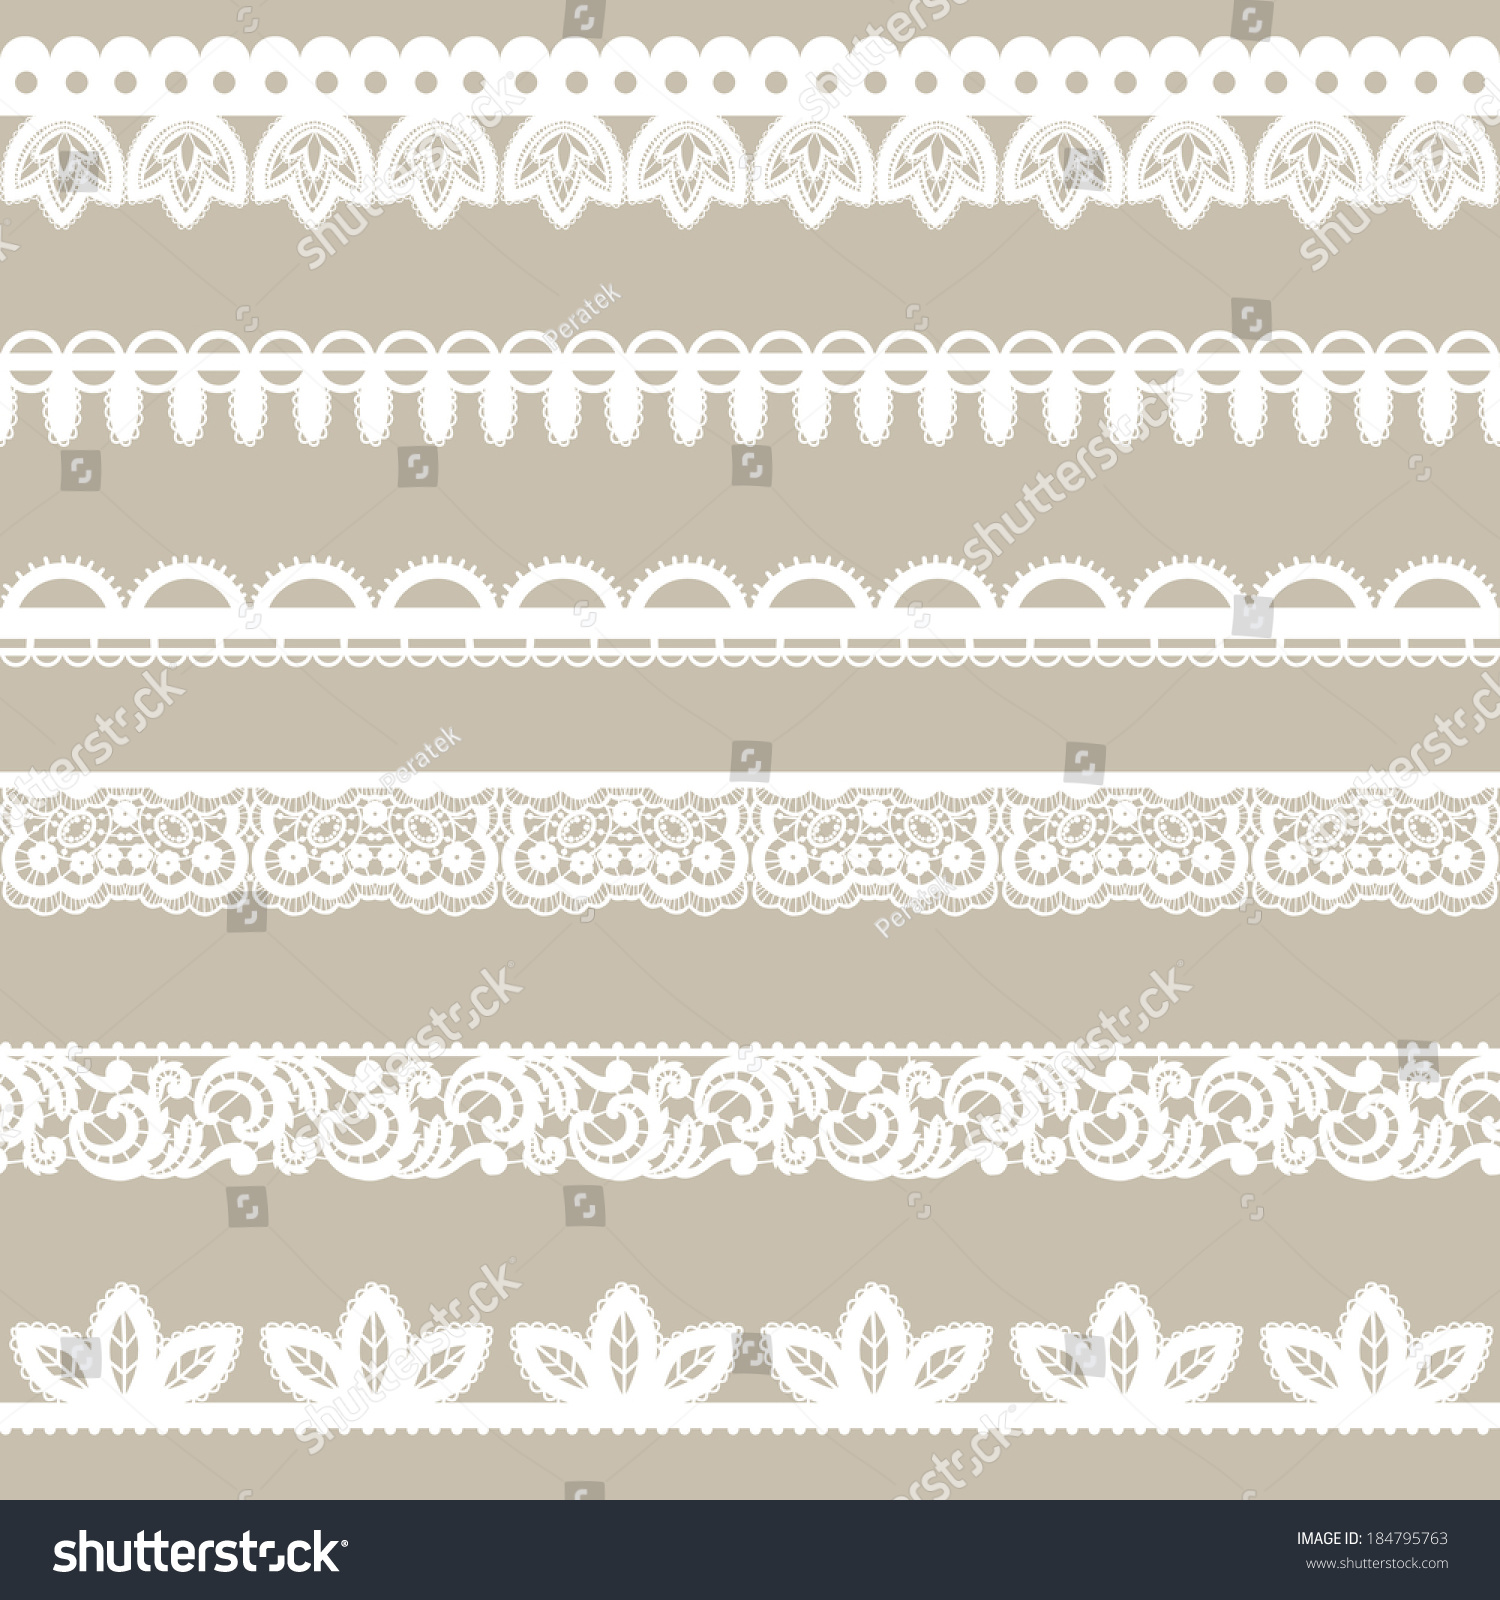 Set of horizontal lace borders #184795763